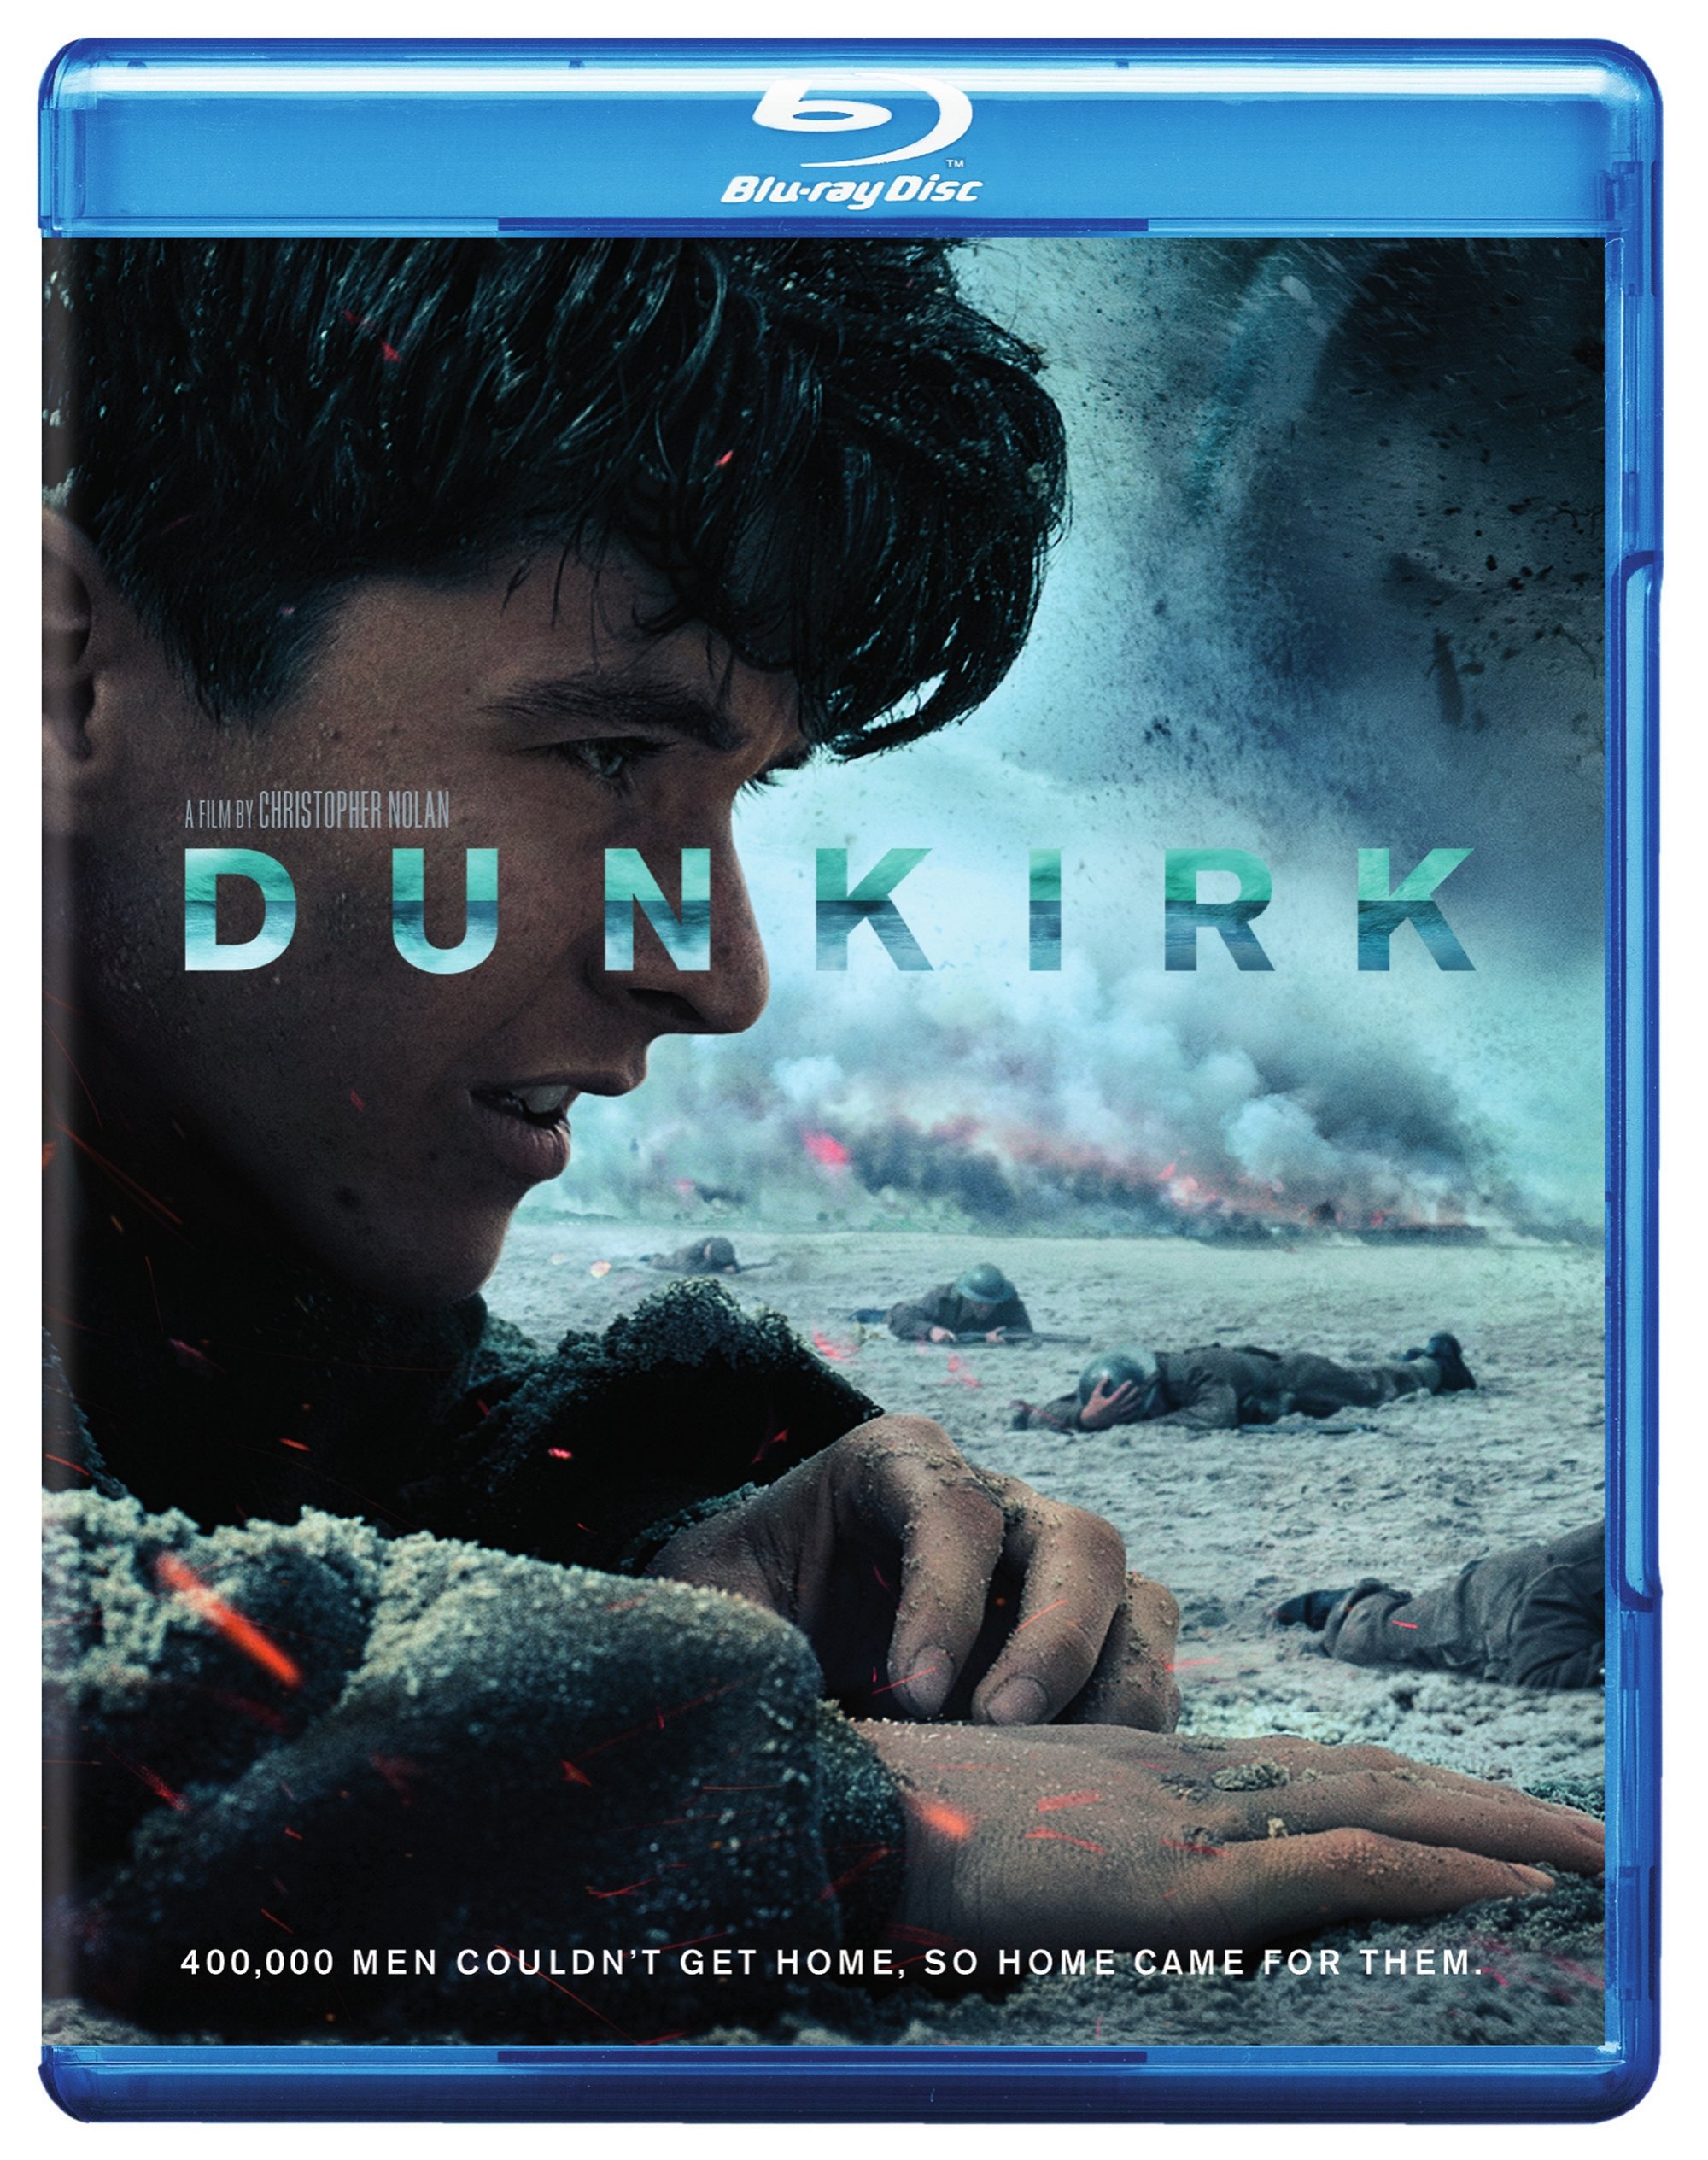 Dunkirk (Box Set) - Blu-ray [ 2017 ]  - War Movies On Blu-ray - Movies On GRUV